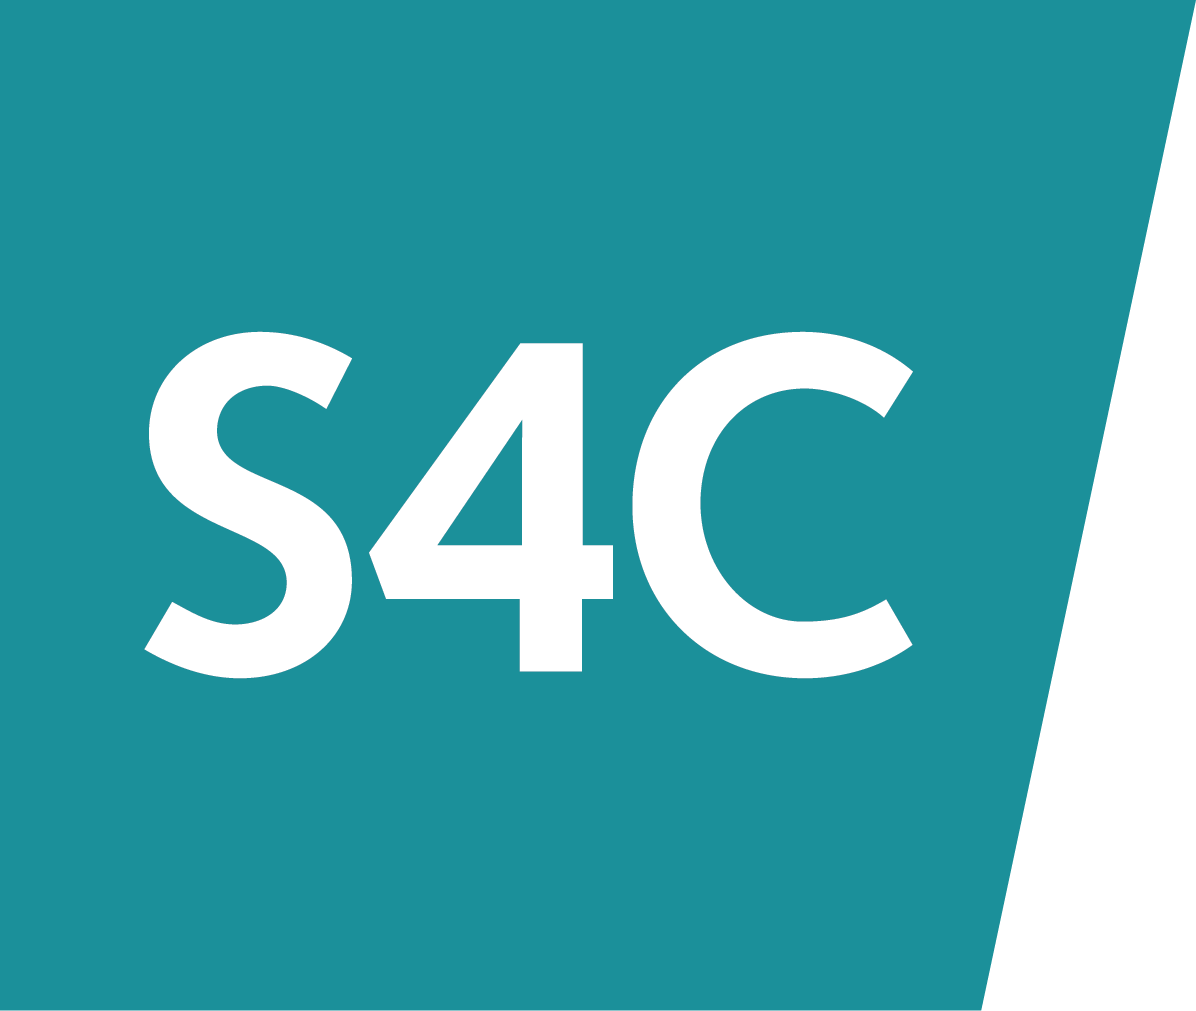 S4C Logo